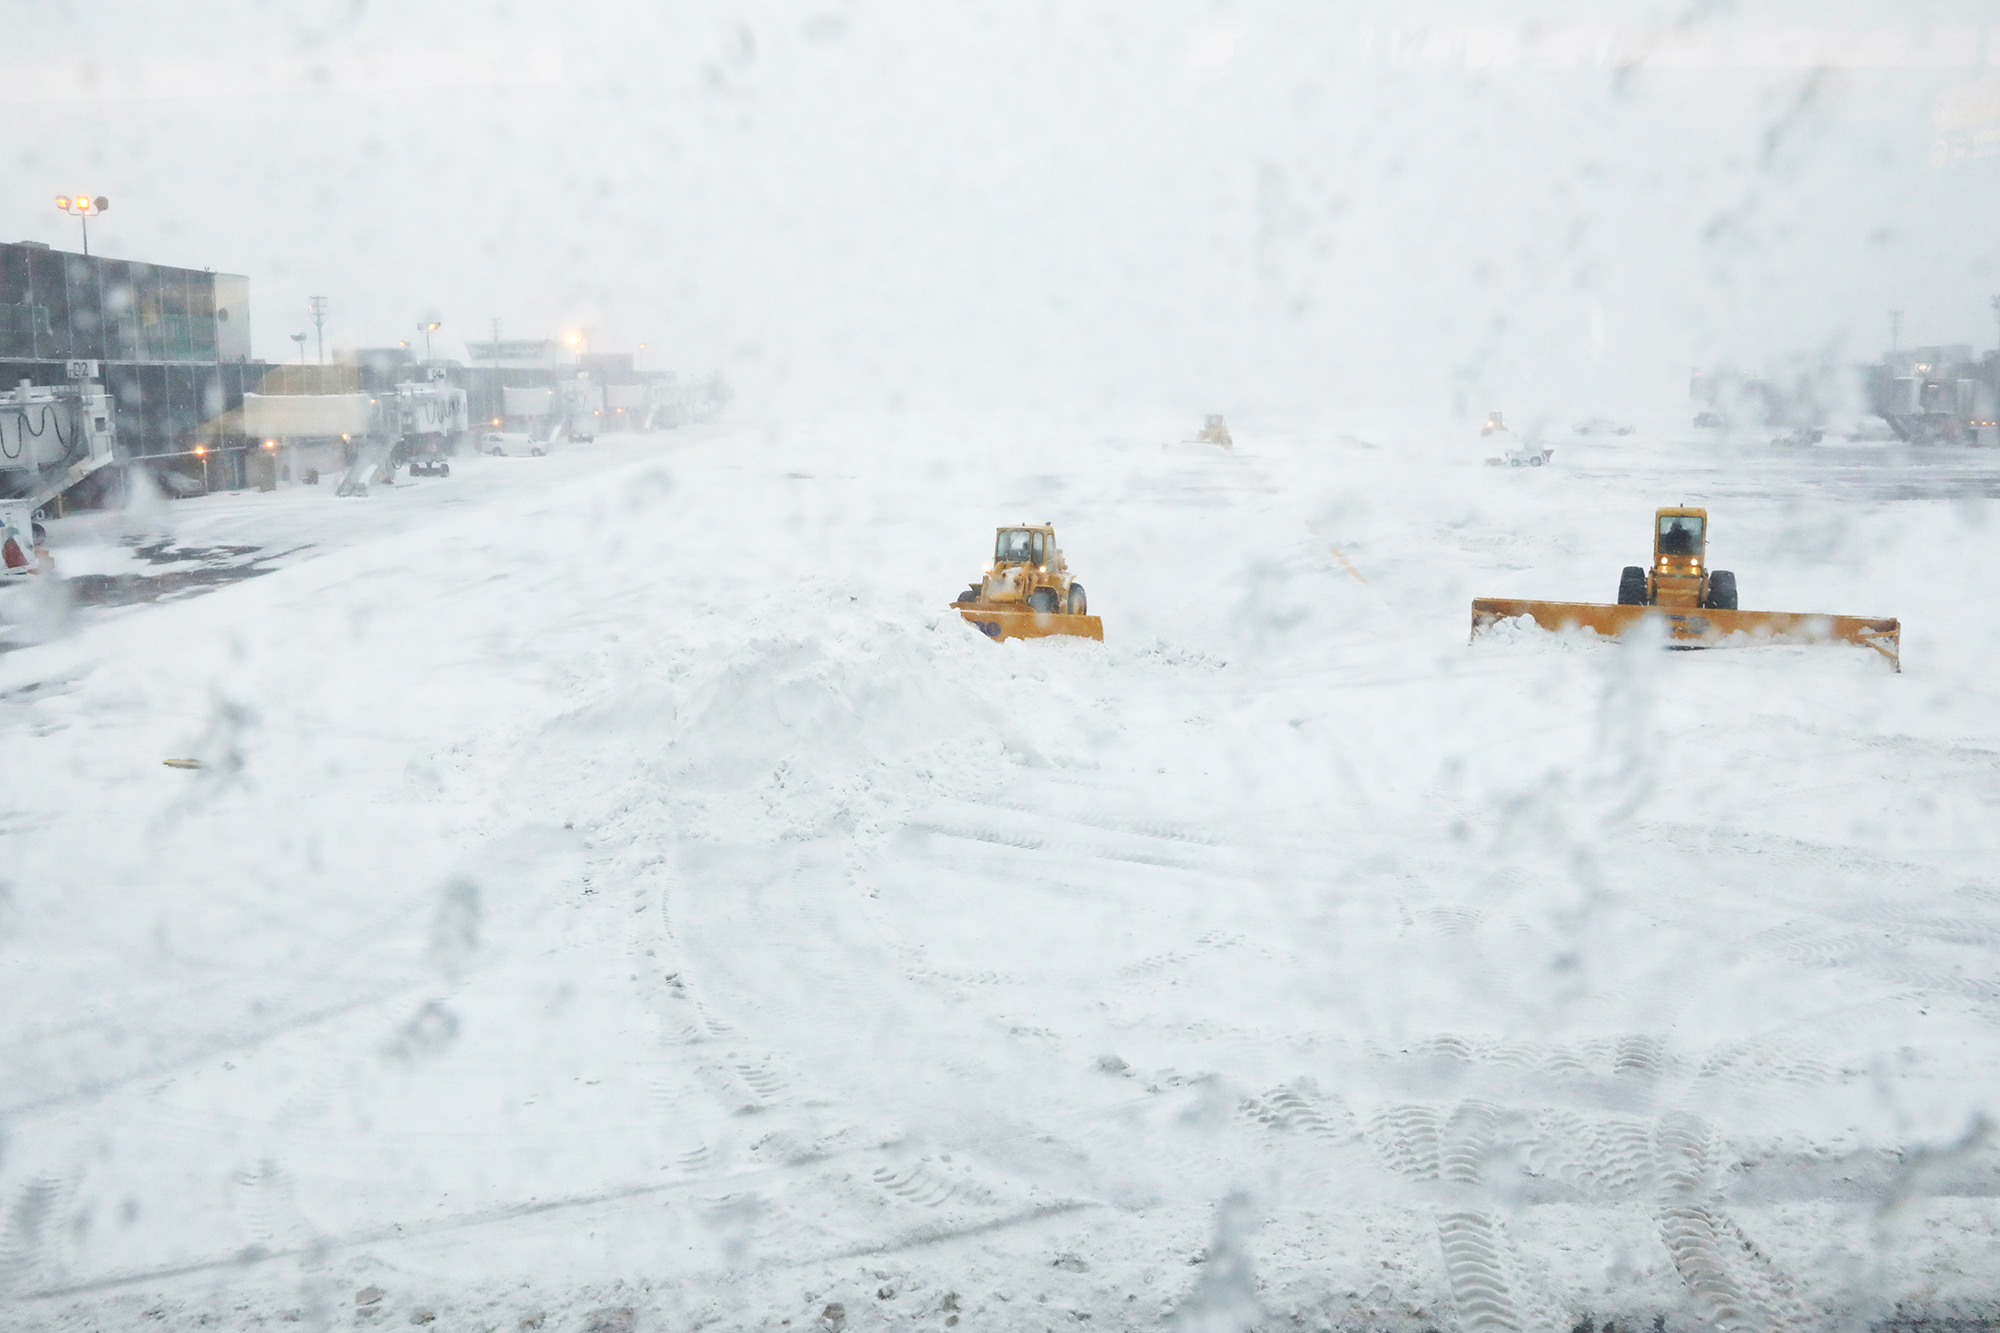 Snowplows clear the runway of snow at LaGuardia Airport in New York